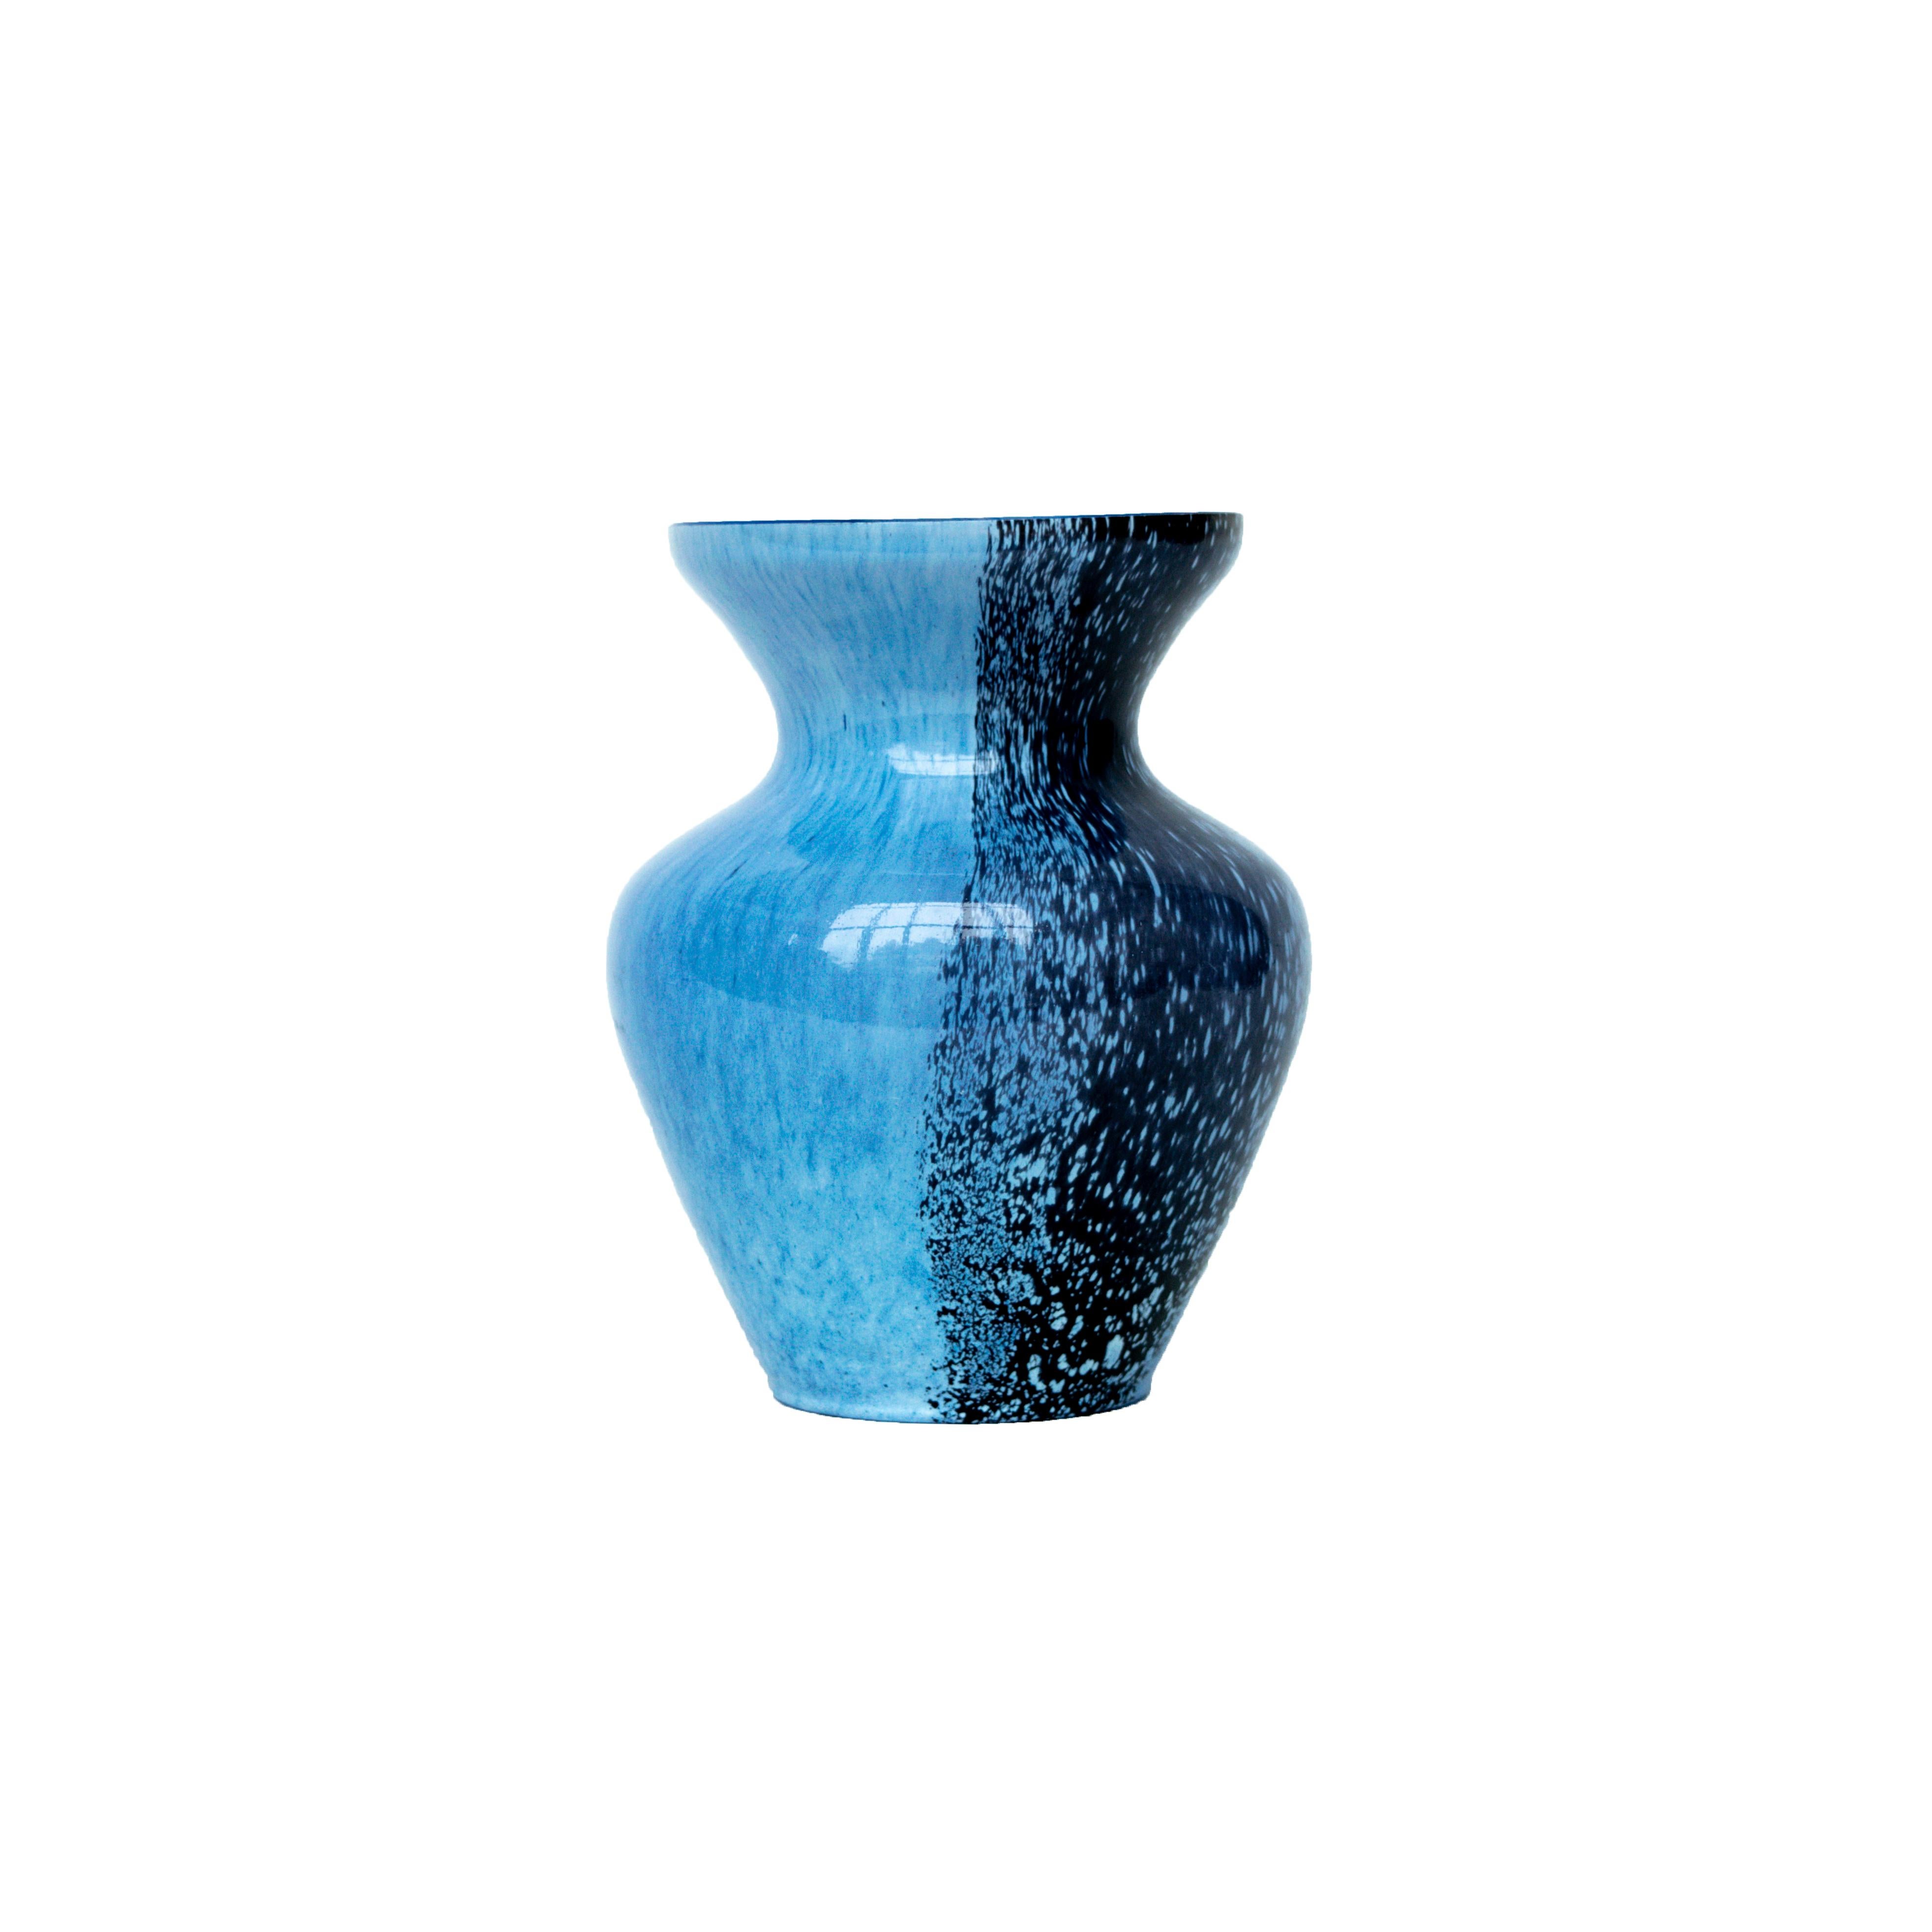 Lovely vase probably manufactured by Orrefors.